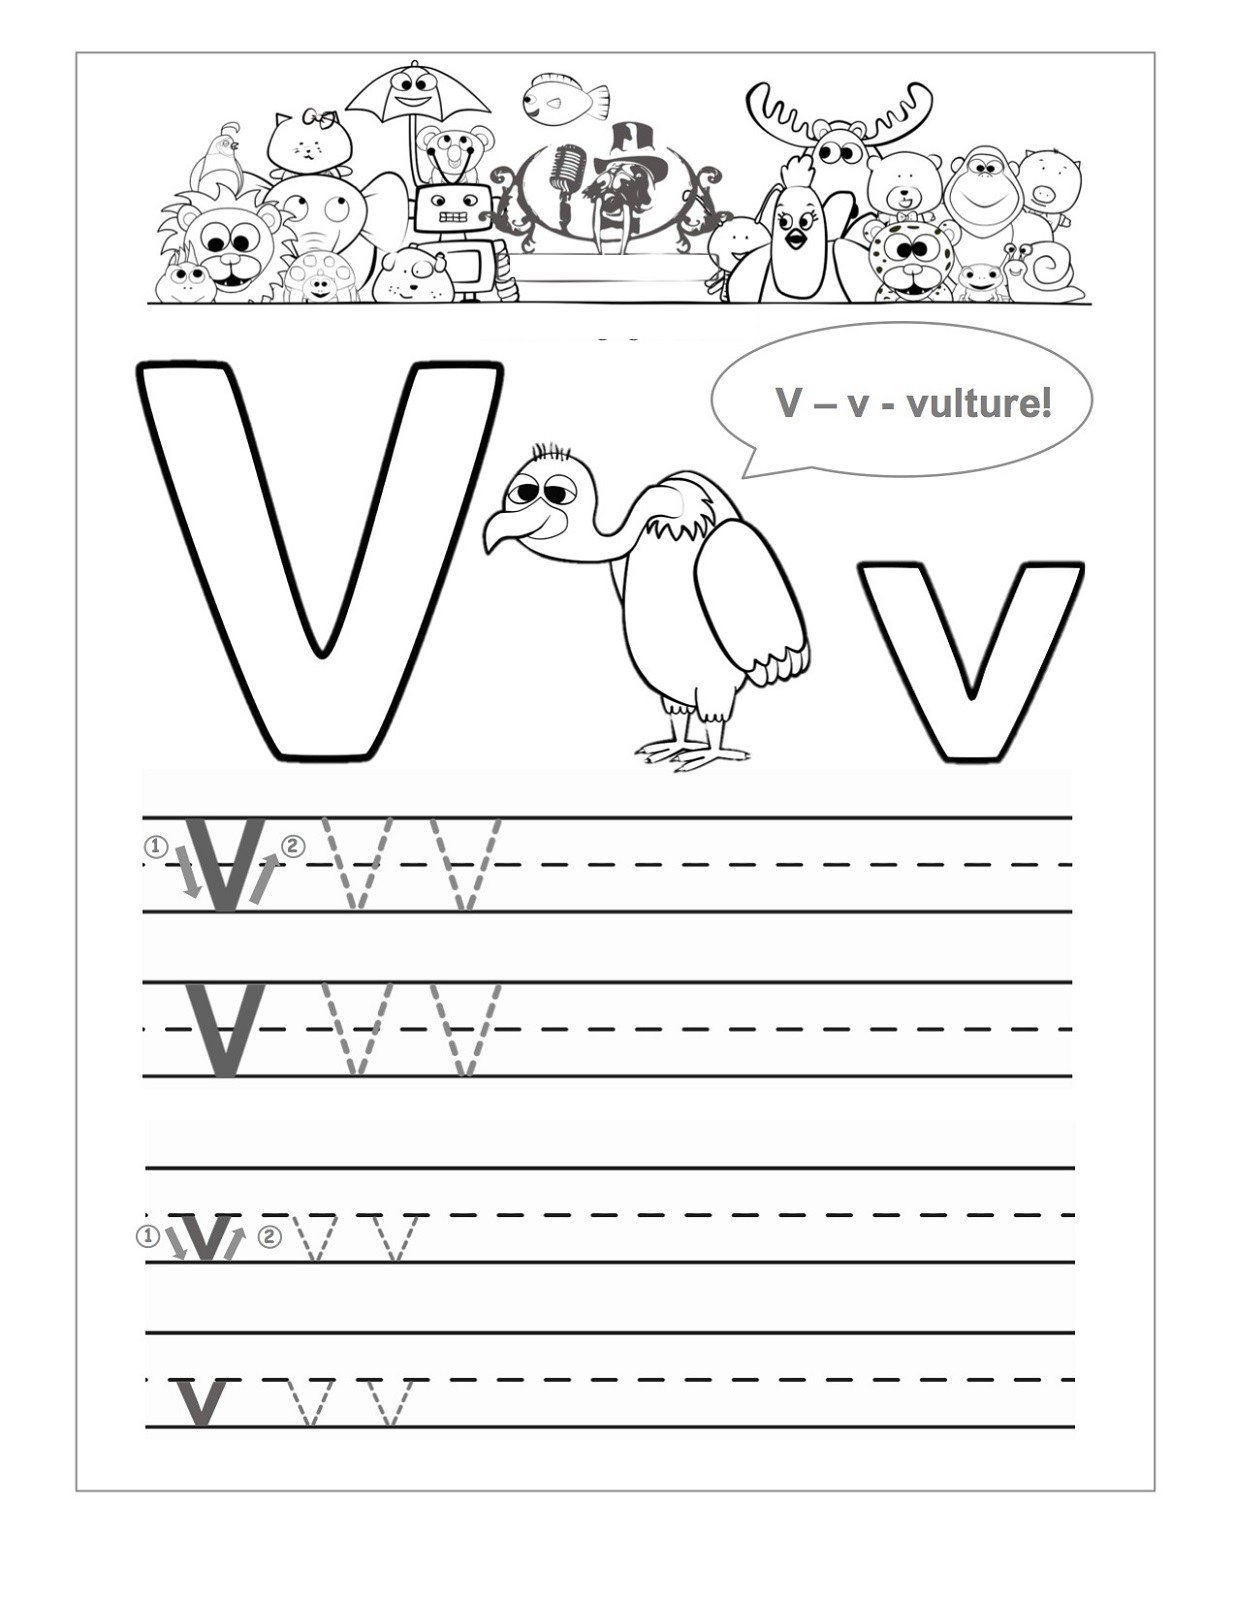 Handwriting Worksheet Sparklebox | Printable Worksheets And intended for Letter E Worksheets Sparklebox